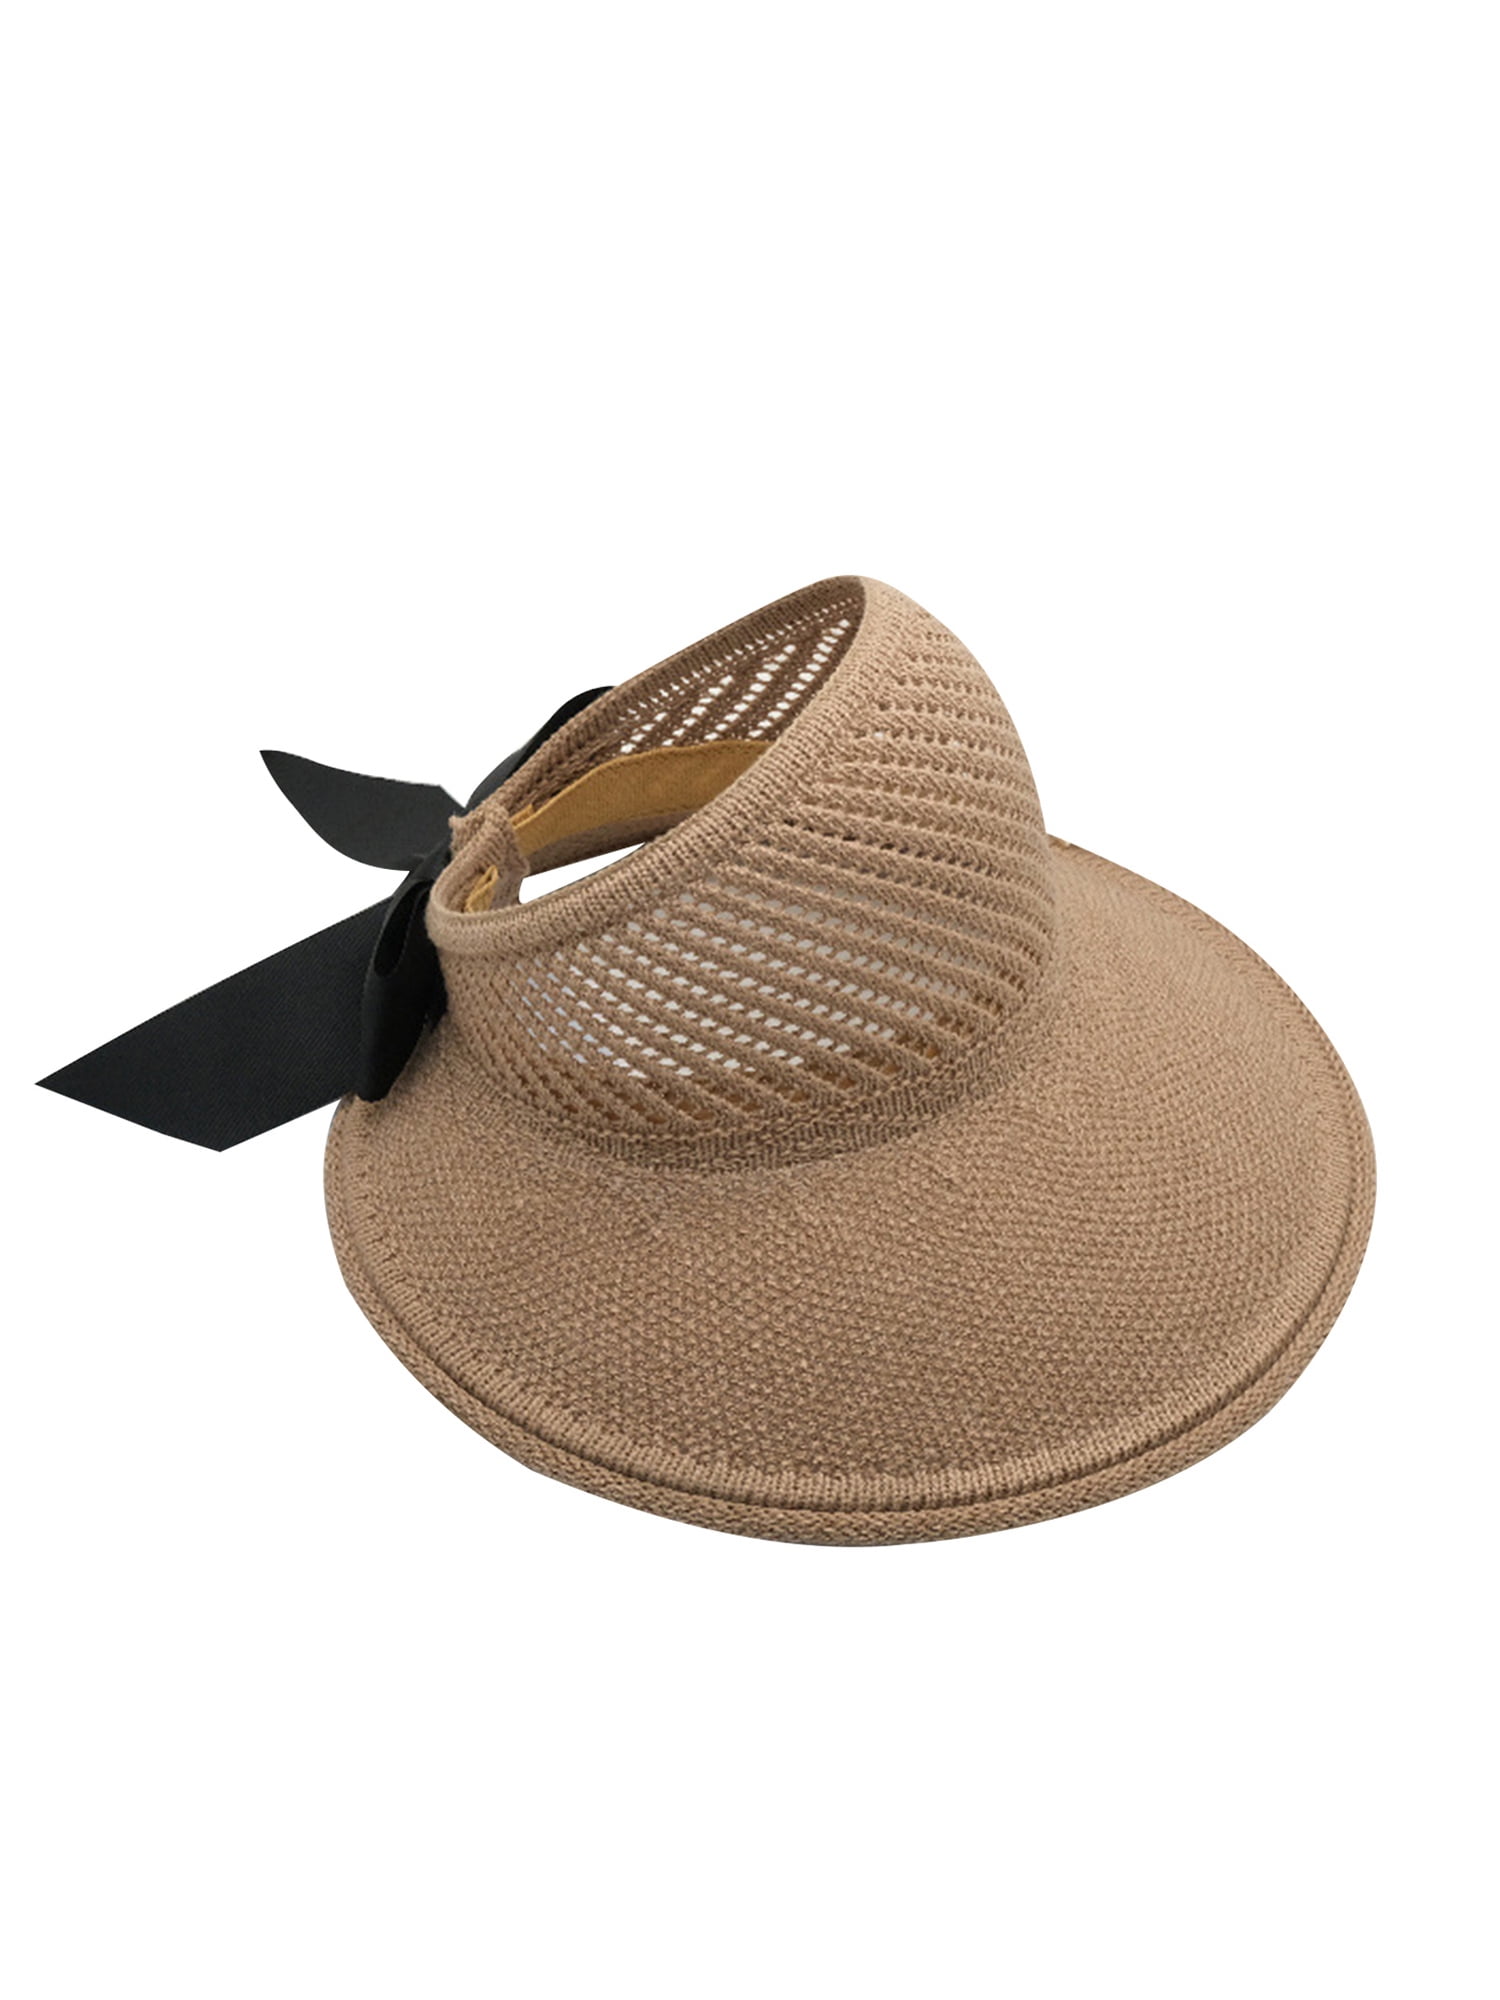 Chapeau Femme Sun Visors Cap Women Casual Summer Beach Bows Wide Brim Straw Hats 